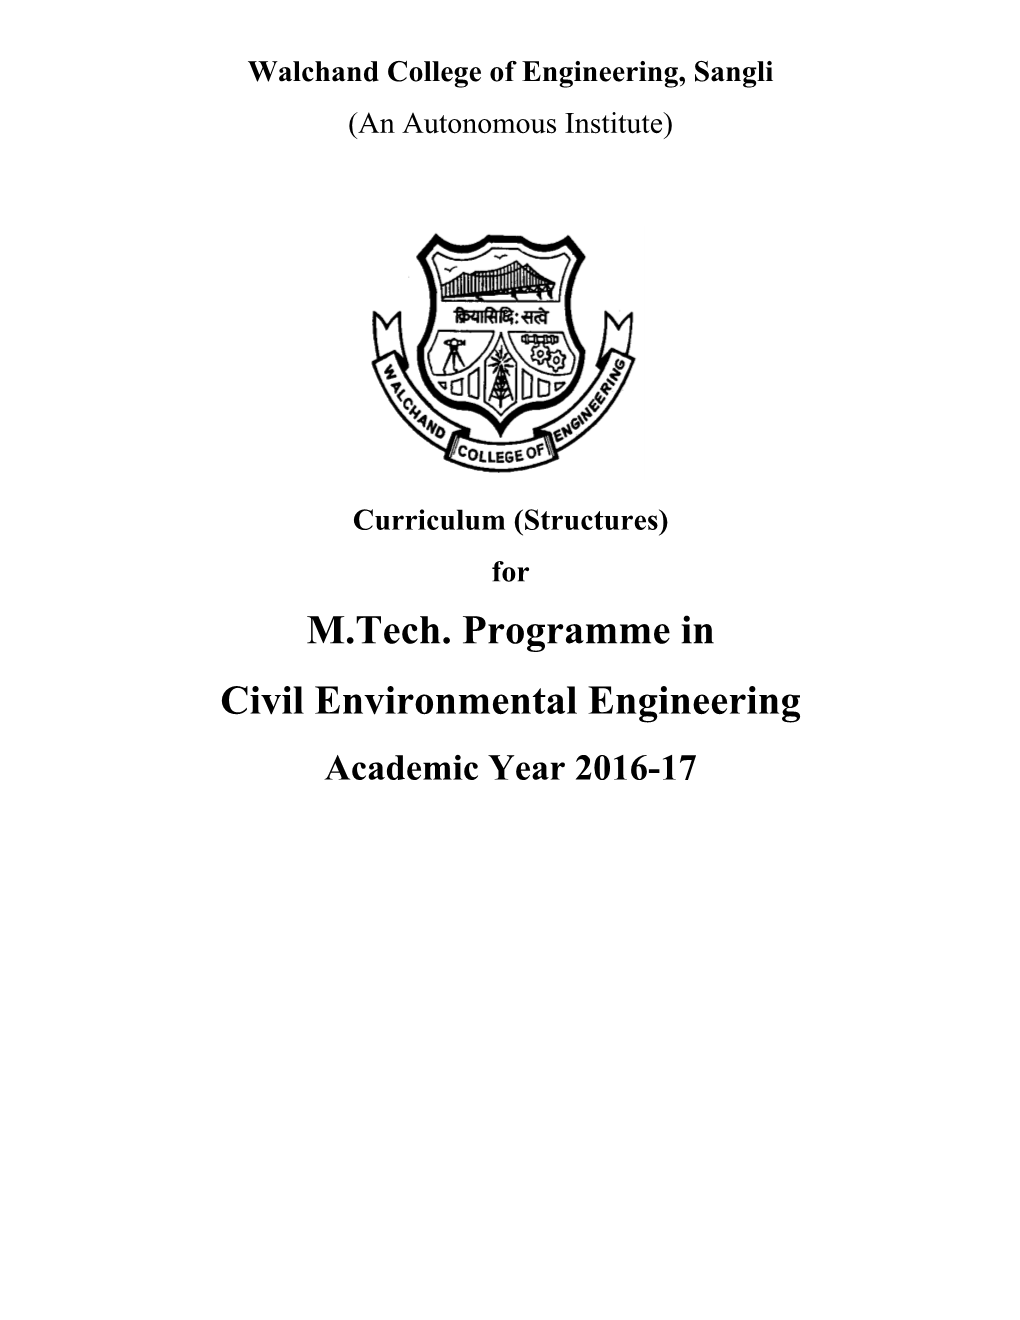 M.Tech. Programme in Civil Environmental Engineering